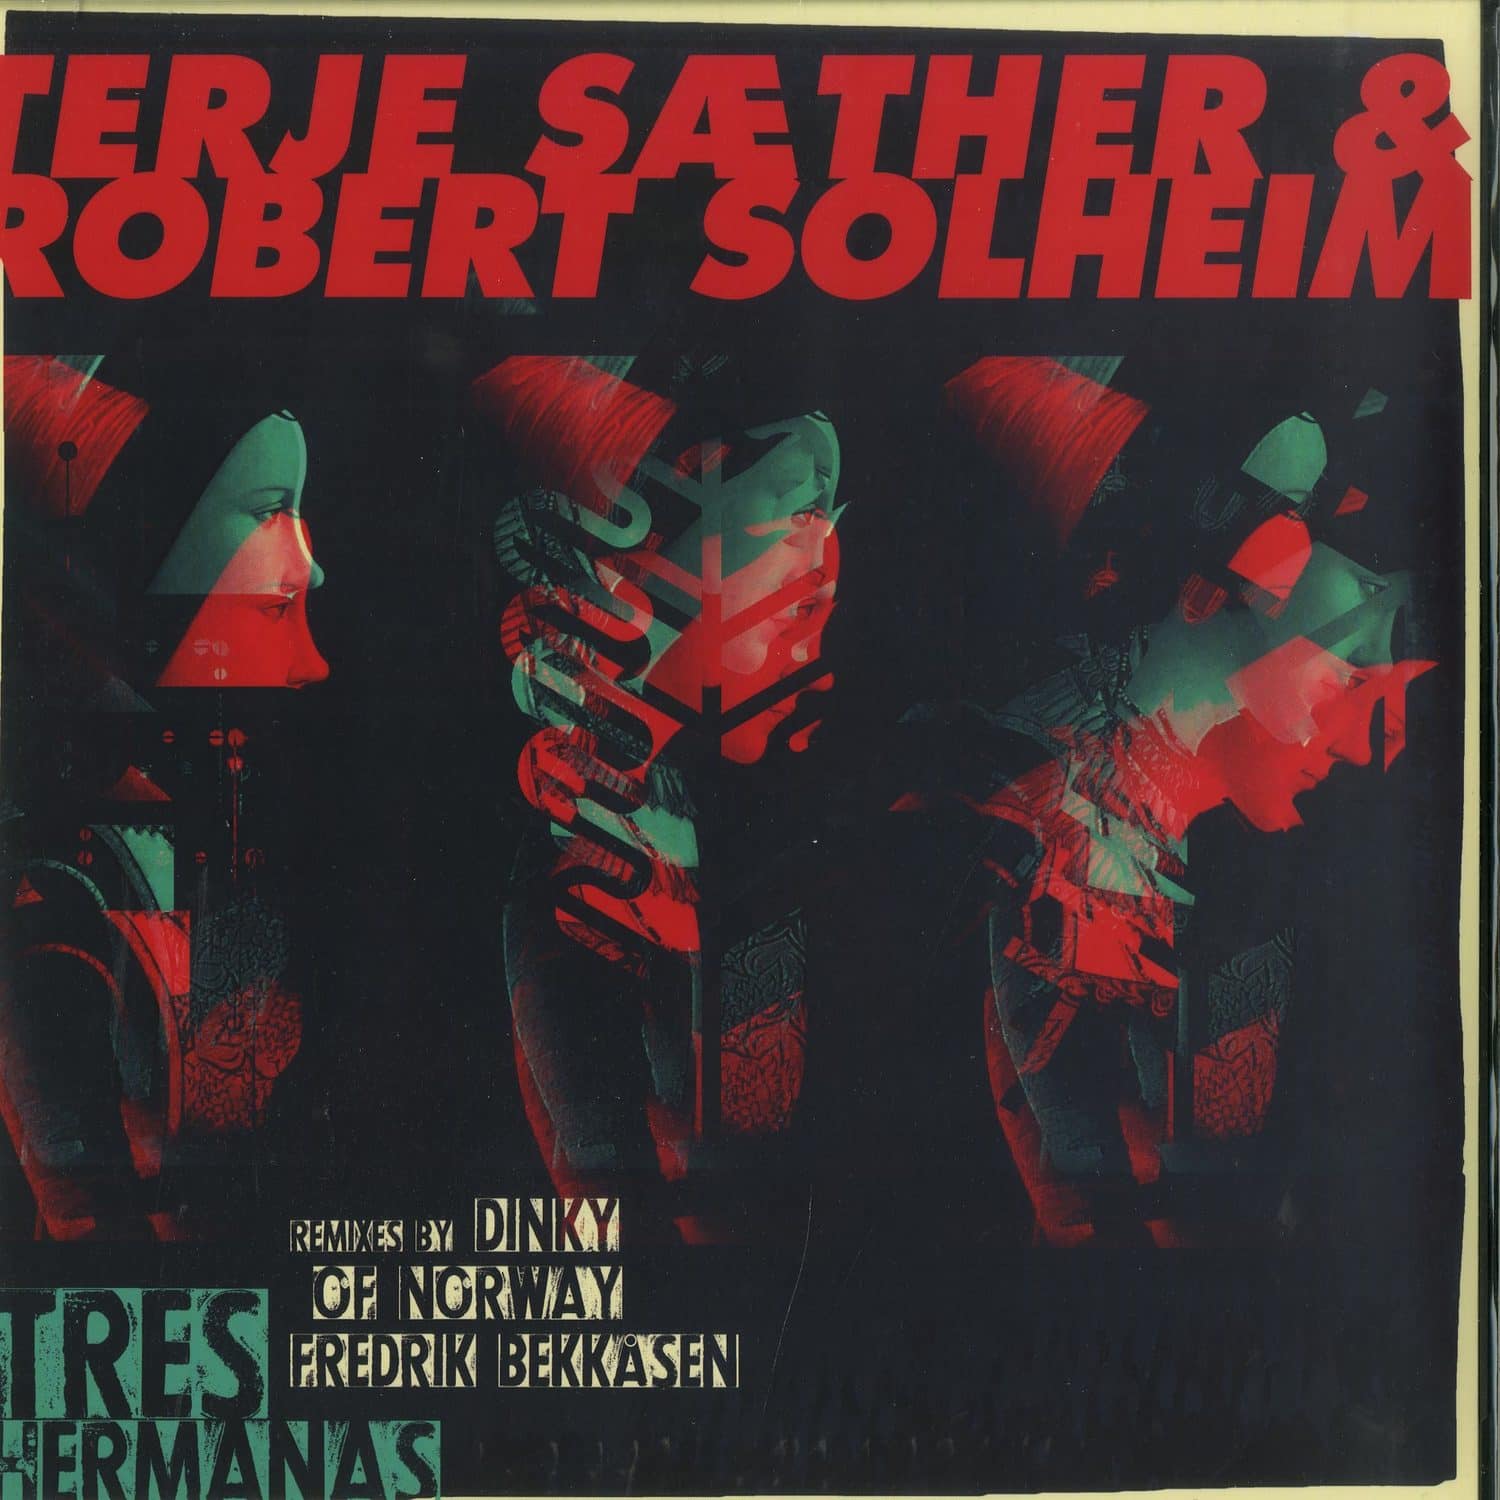 Terje Saether & Robert Solheim - TRES HERMANAS